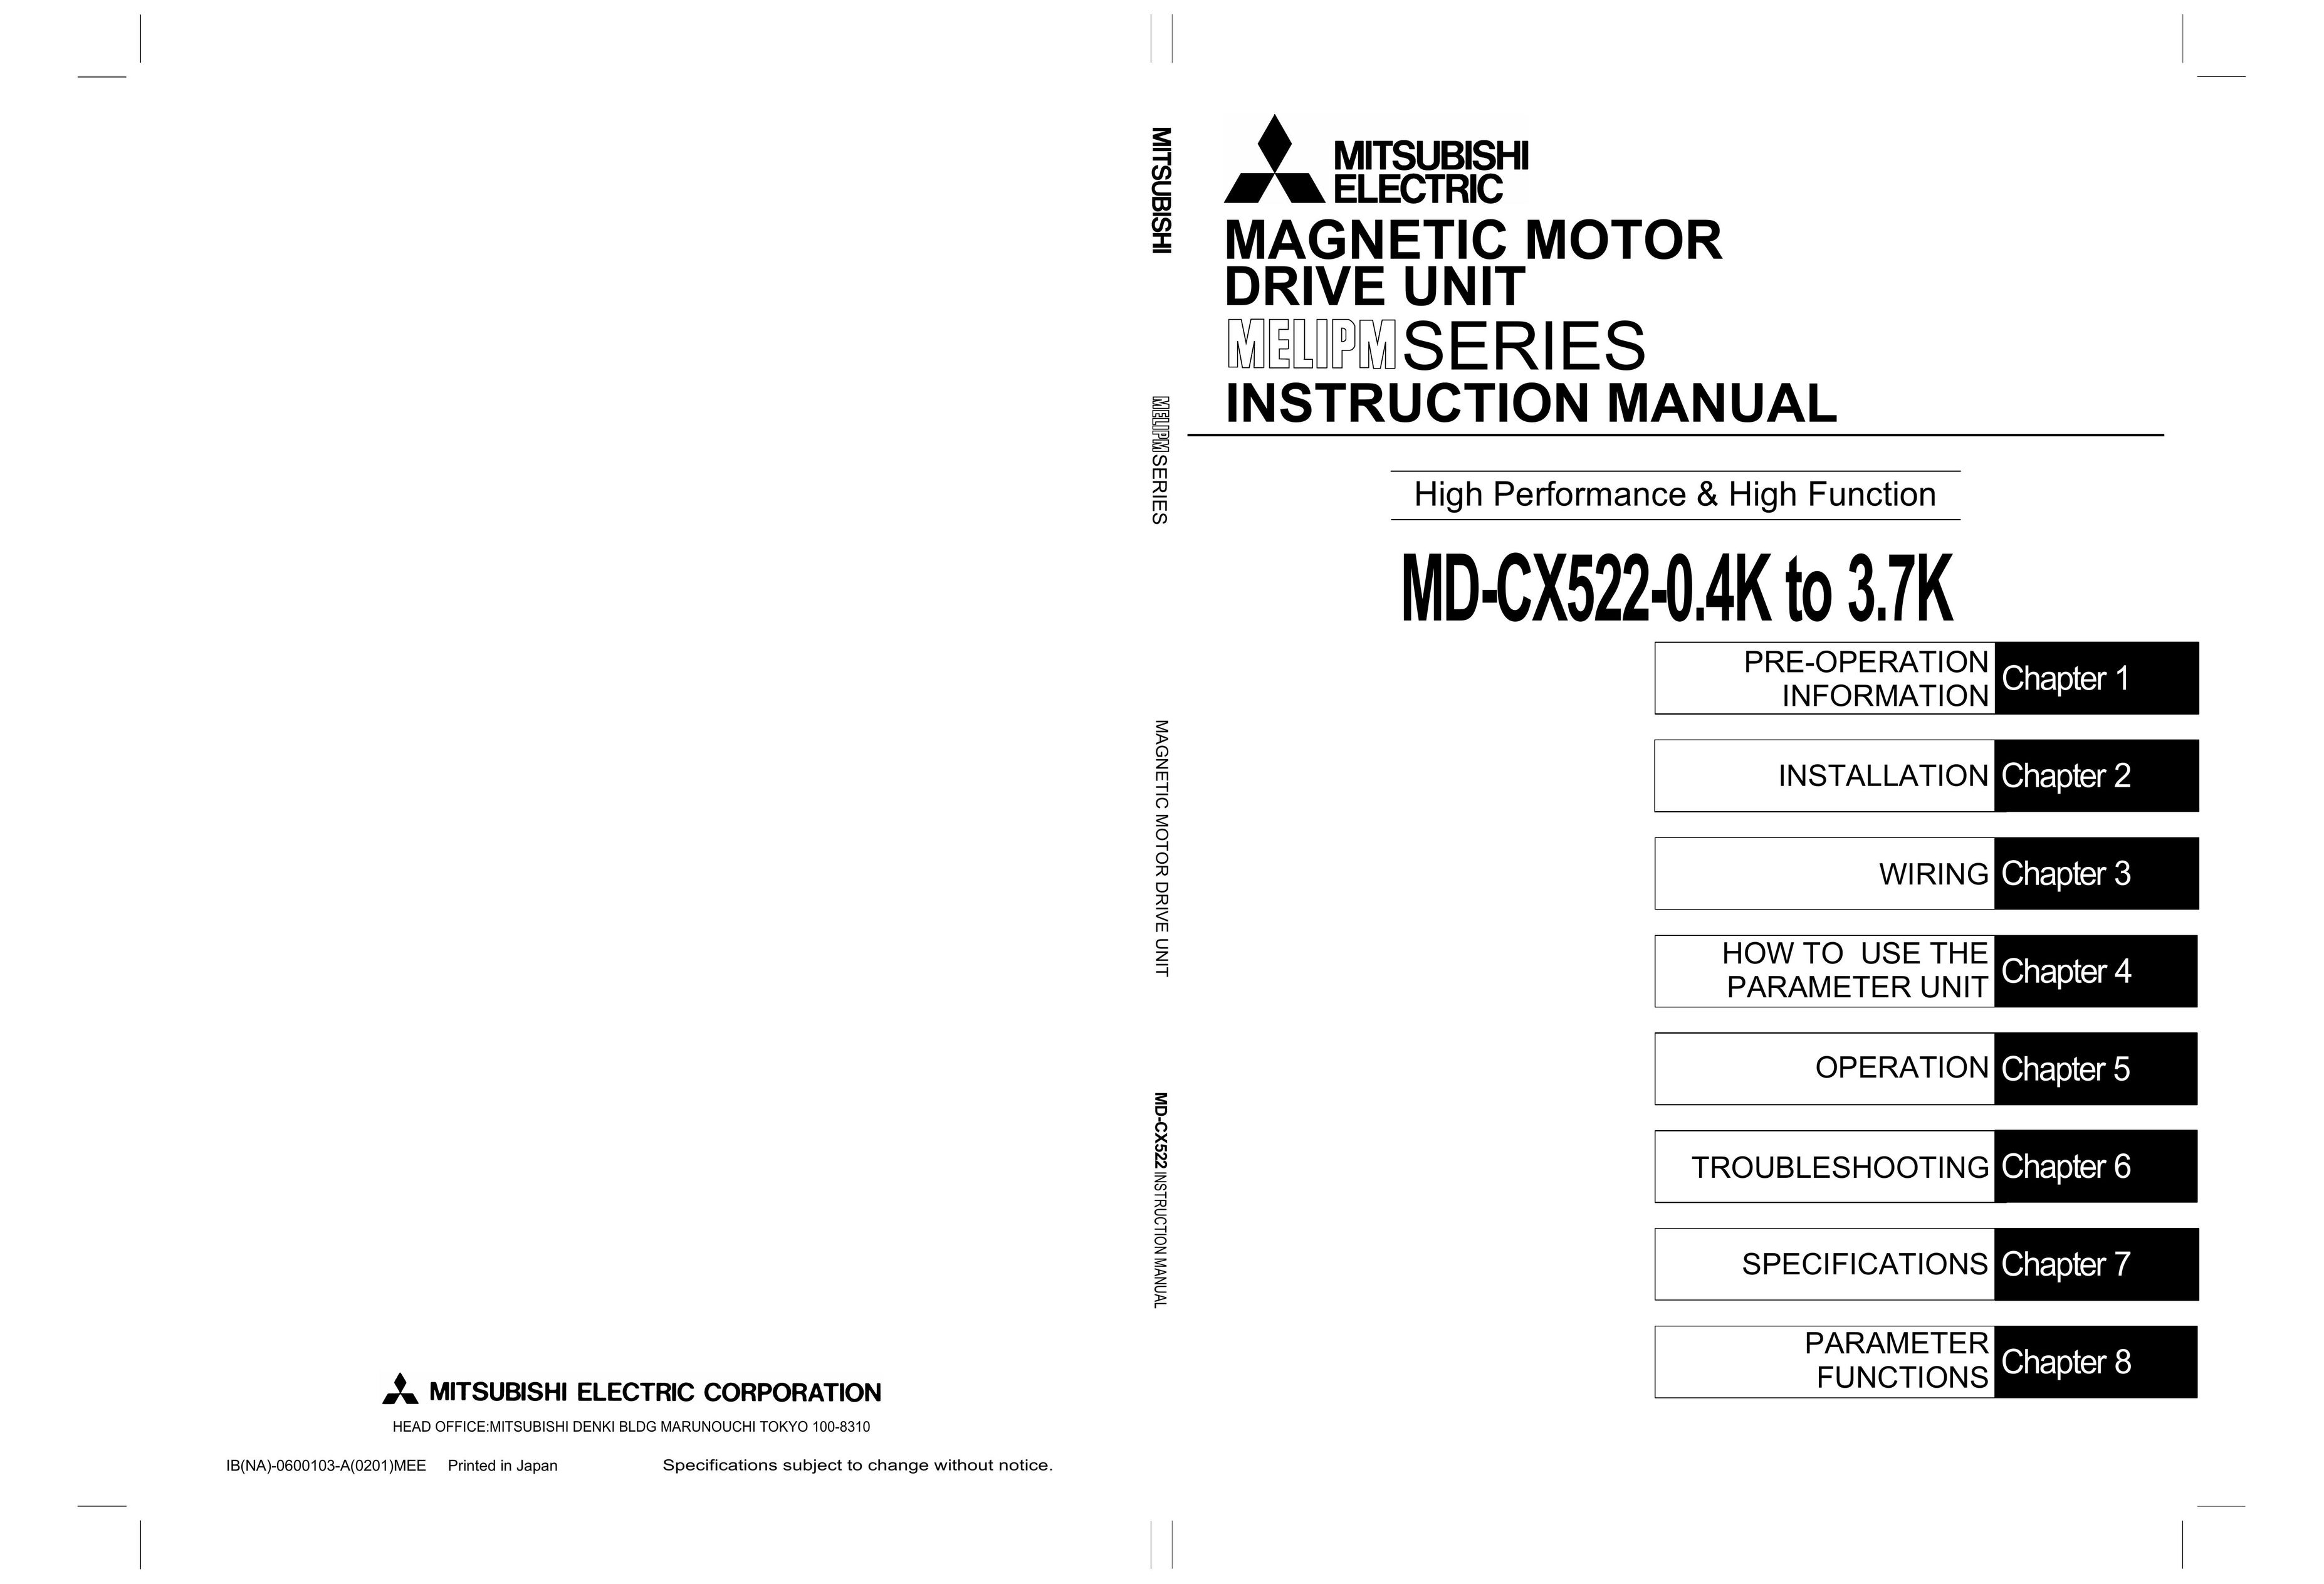 Mitsubishi Electronics MD-CX522-04K to s.7K Building Set User Manual